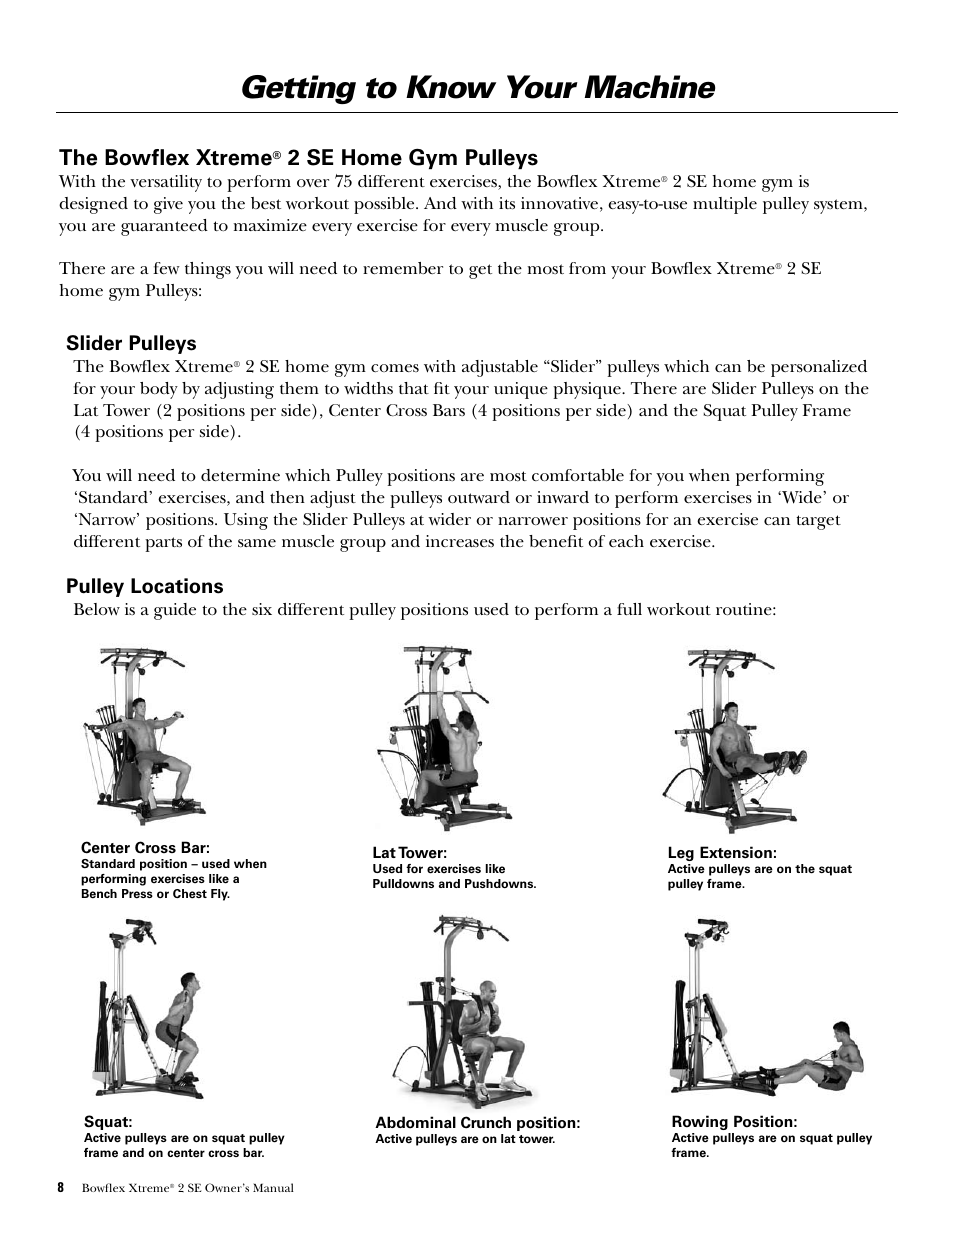 Bowflex Xtreme 2 Exercise Chart